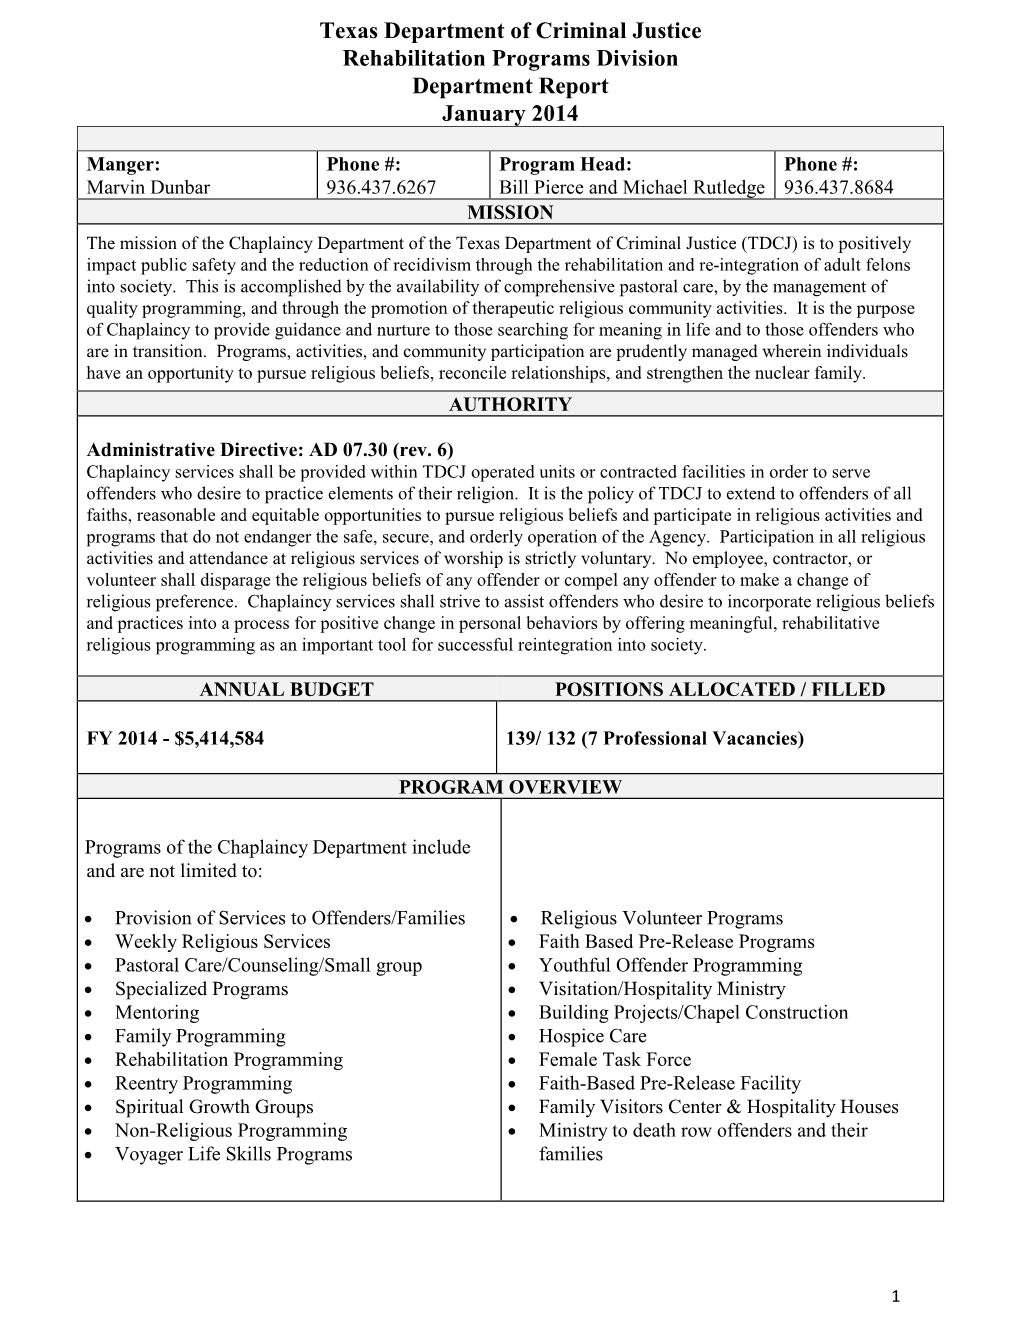 Texas Department of Criminal Justice Rehabilitation Programs Division Department Report January 2014